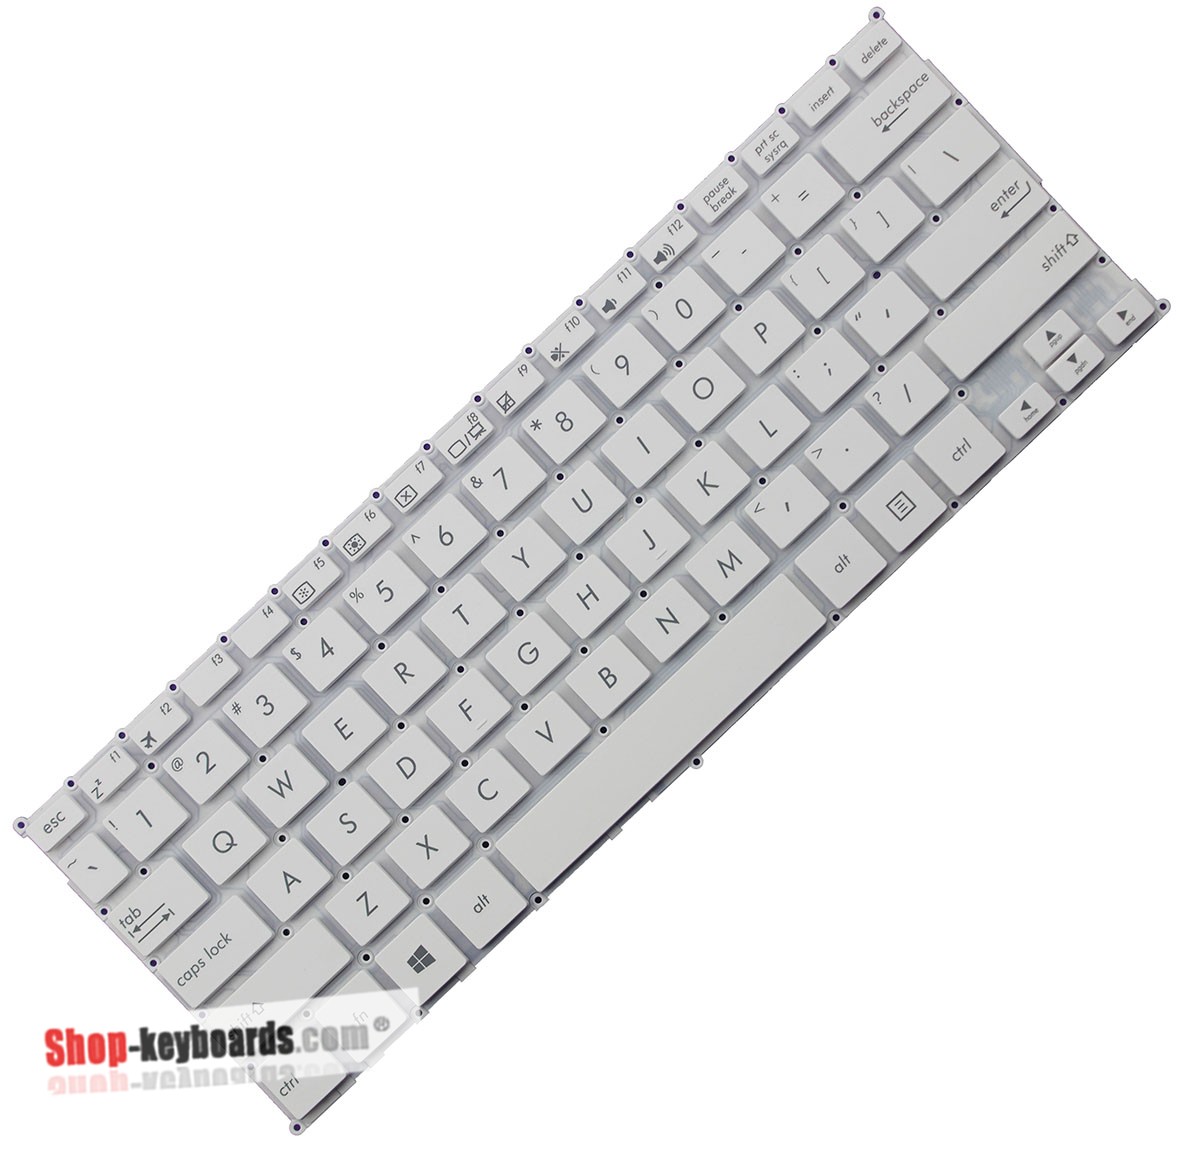 Asus 0KNL0-1122UI00 Keyboard replacement